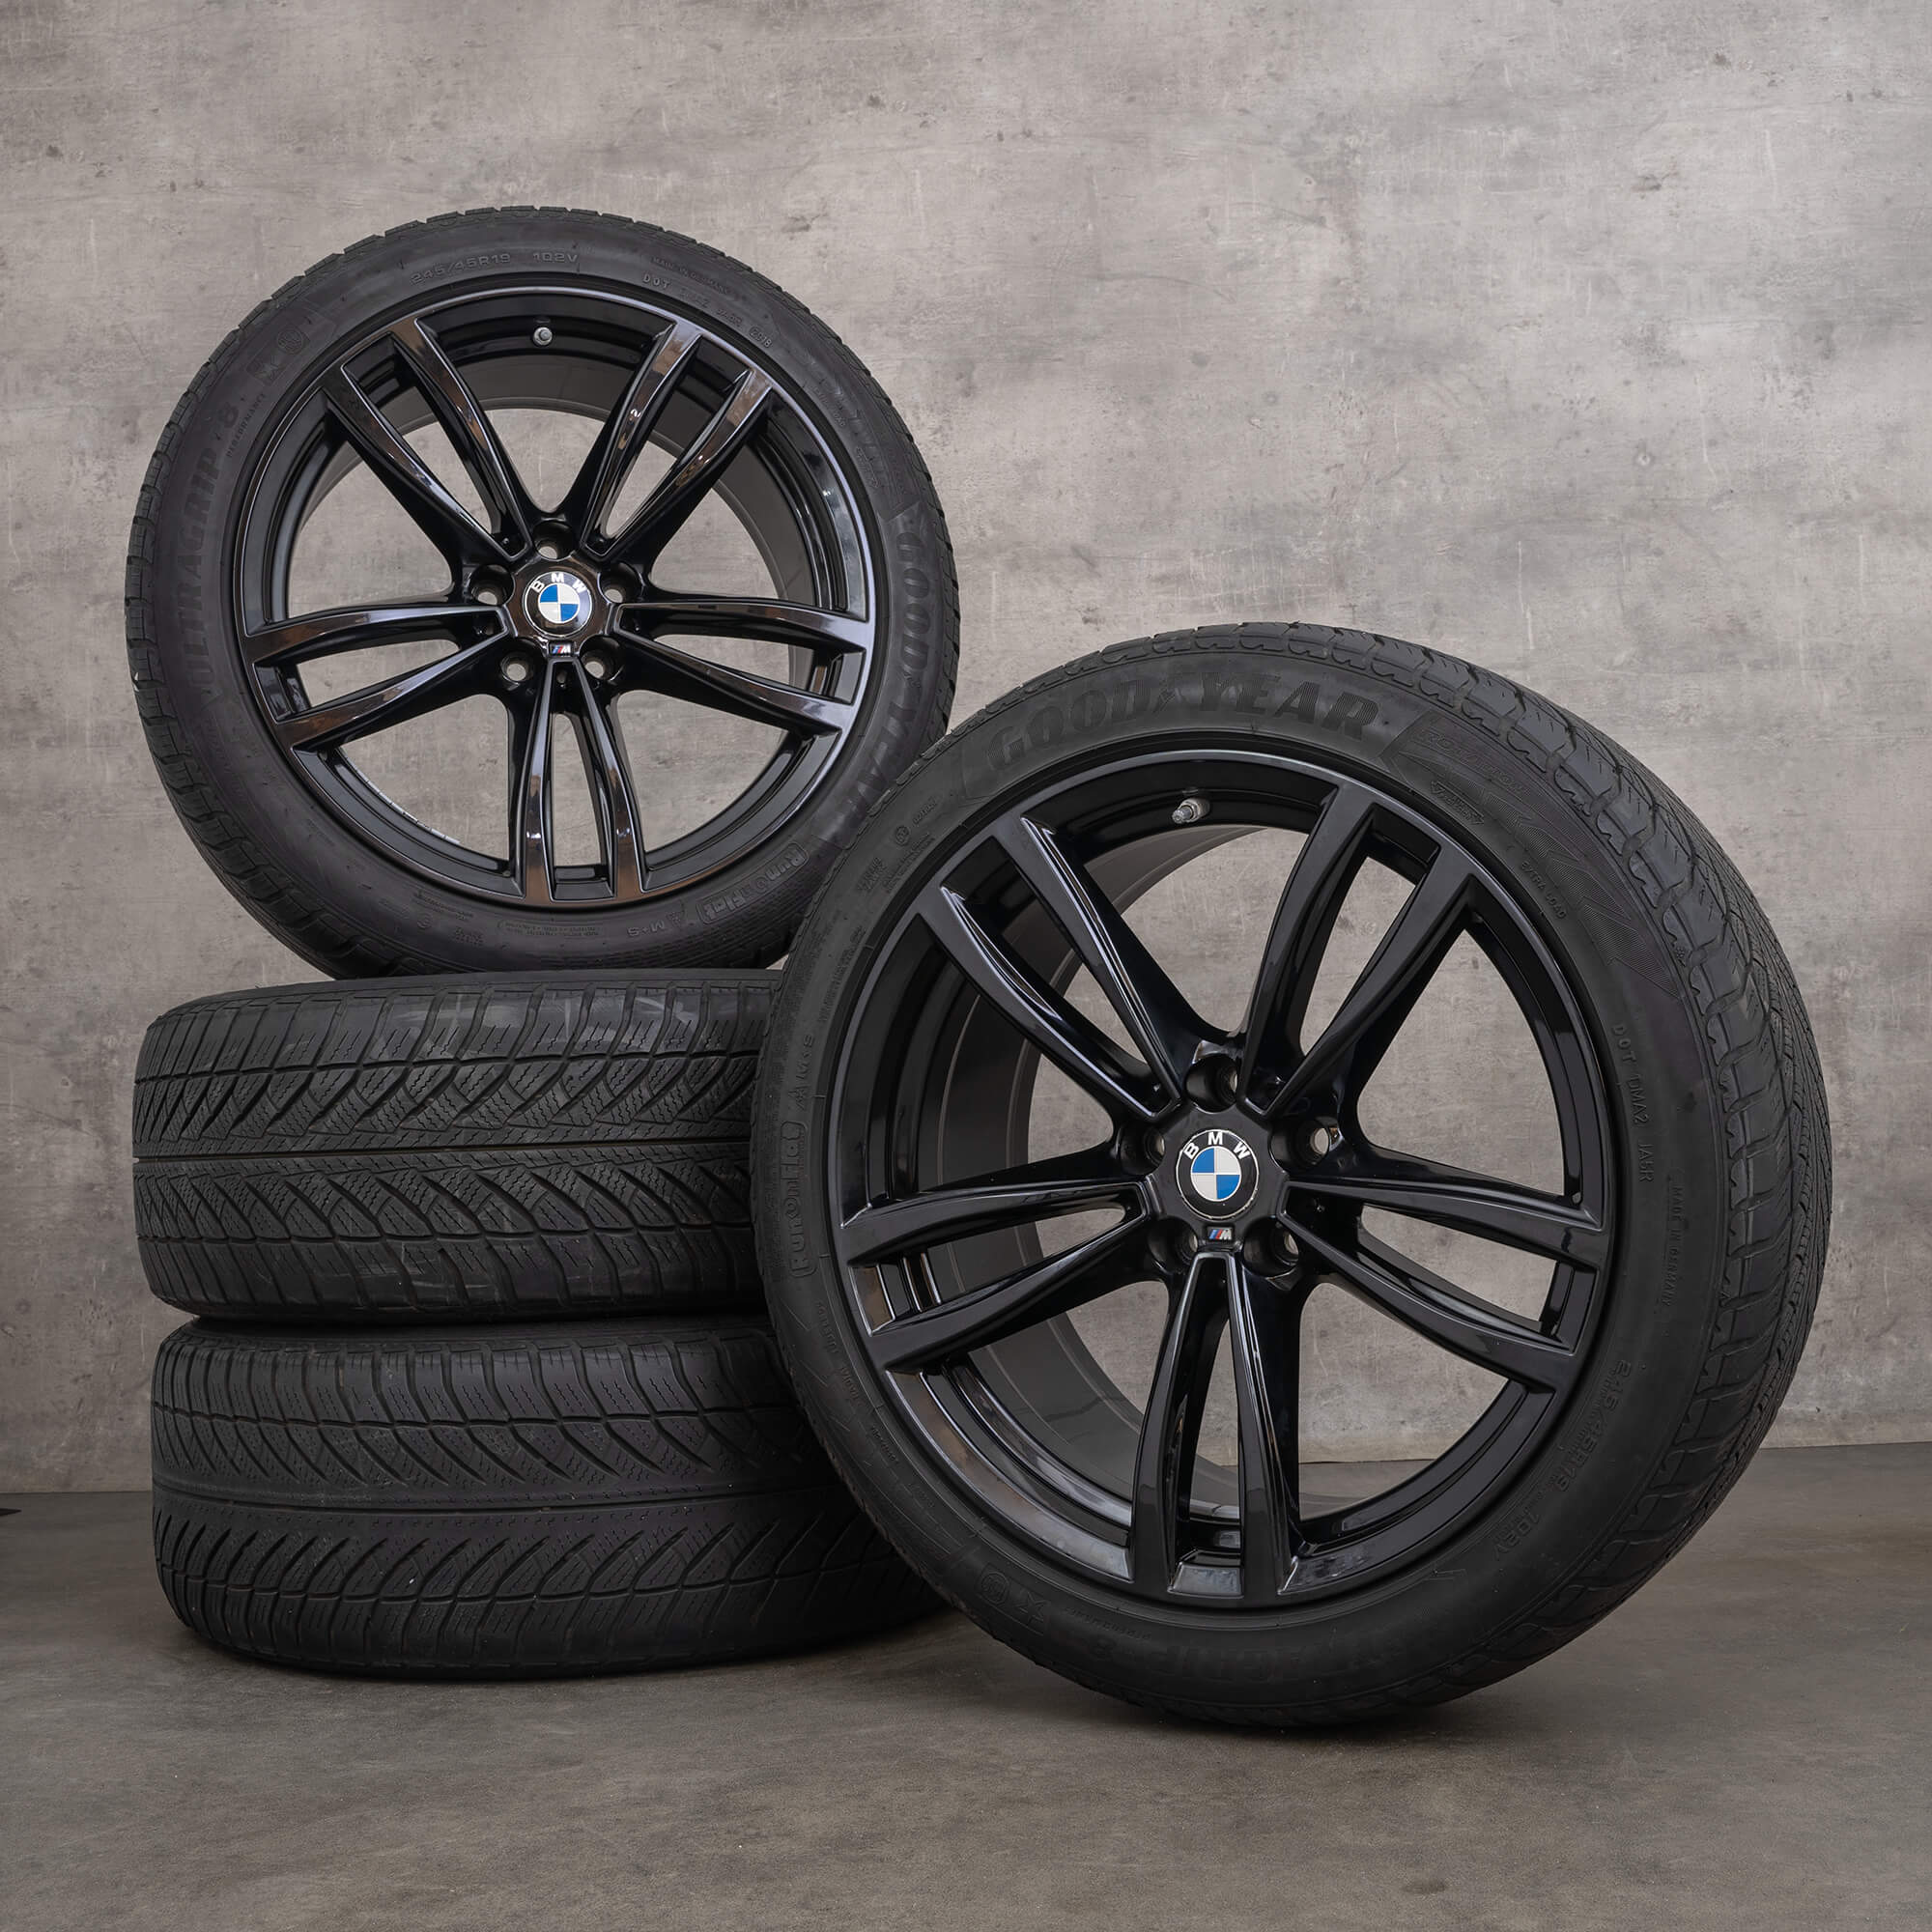 BMW 7 Series G11 G12 6 GT G32 winter wheels 19 inch rims tires styling 647 M